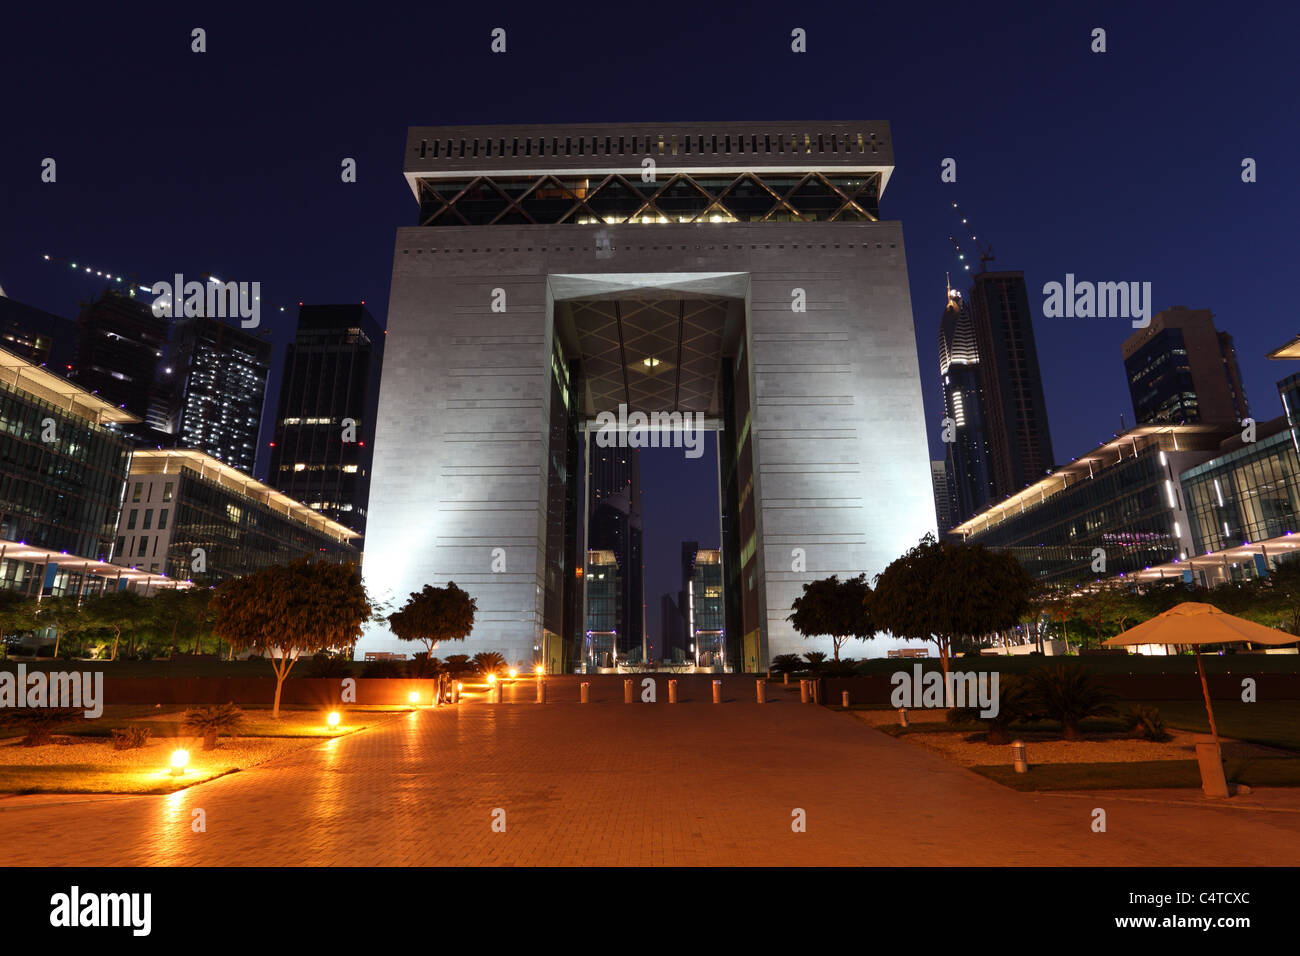 The Dubai International Financial Centre (DIFC) illuminated at night Stock Photo